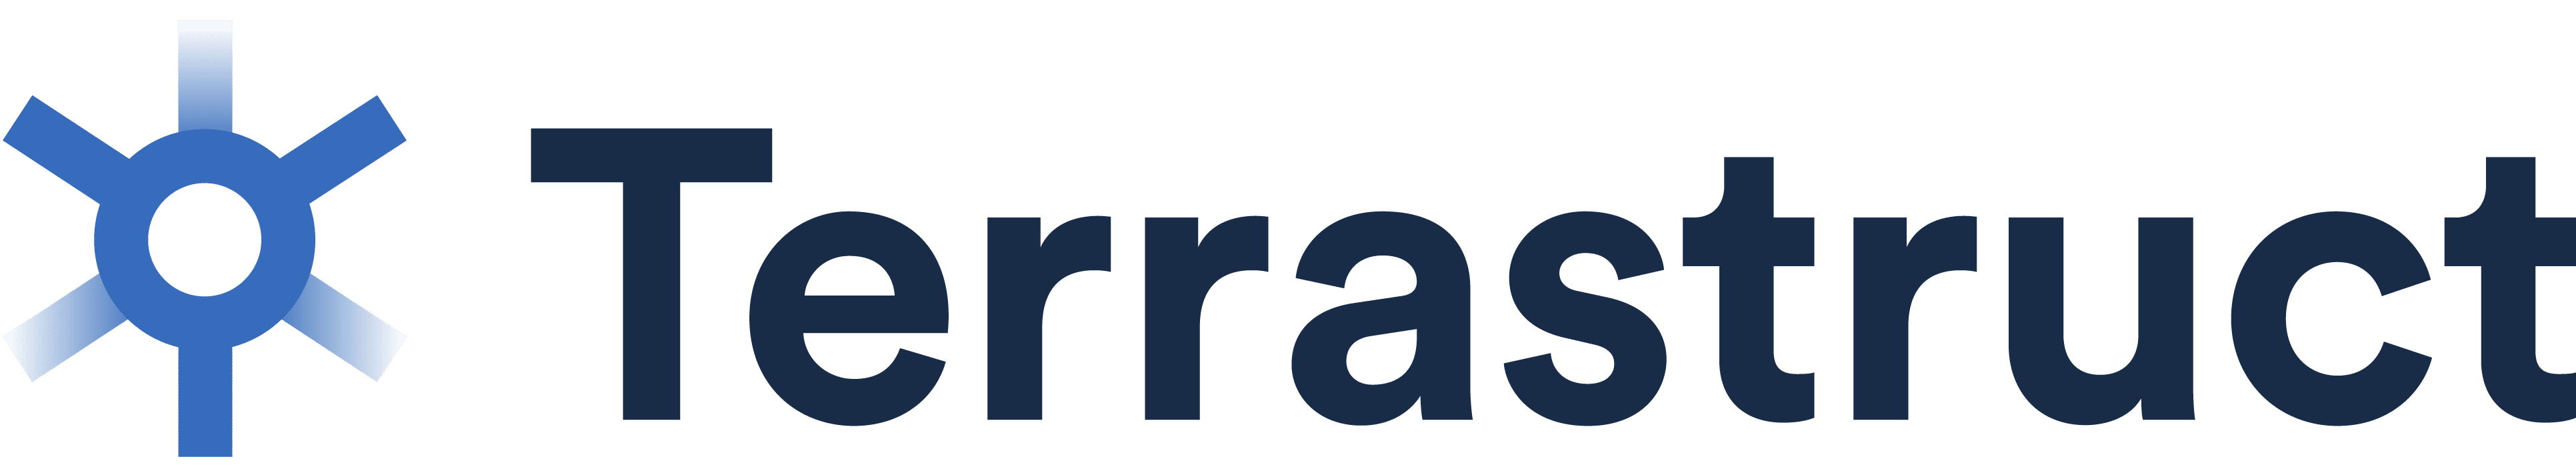 Terrastruct - Diagramming Software